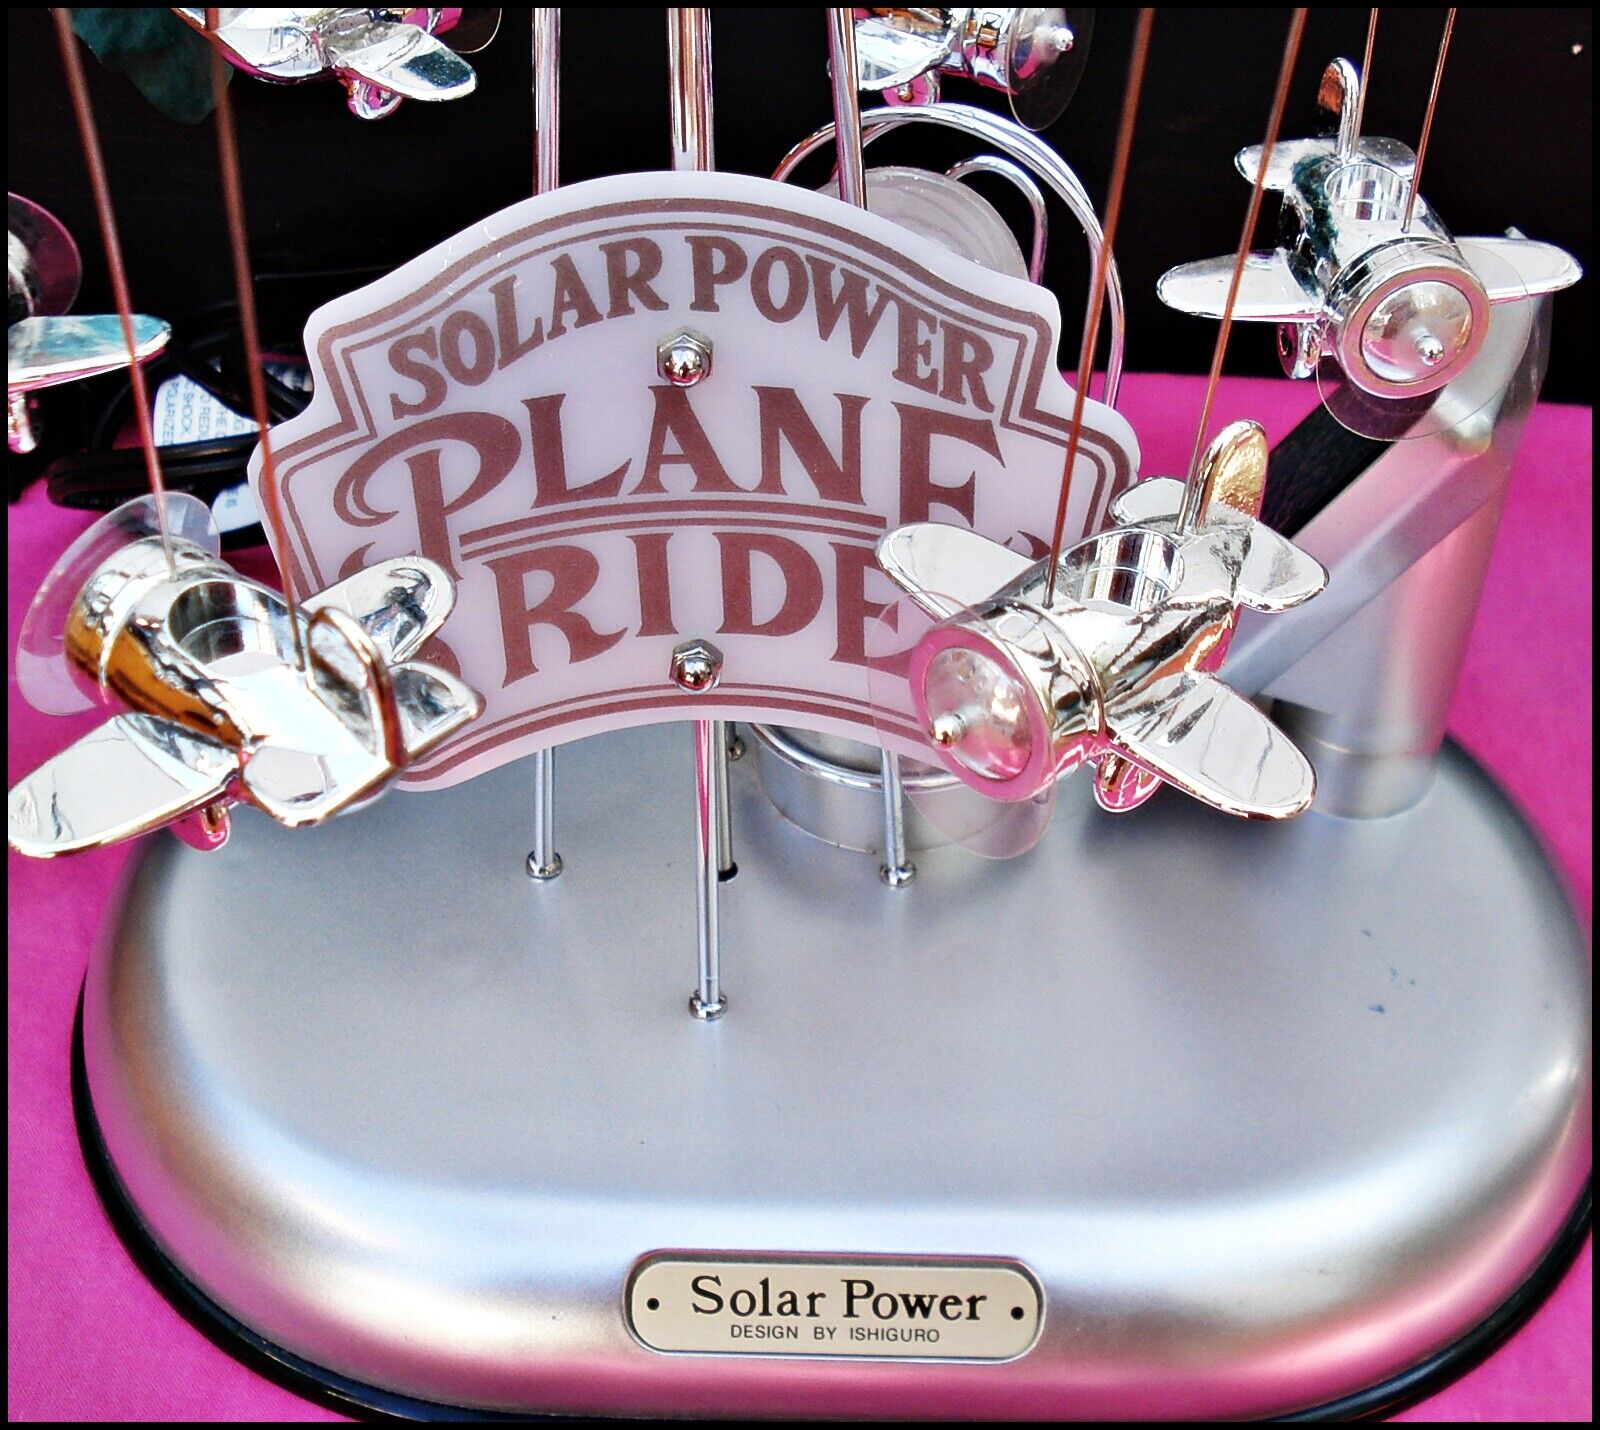 2004 SOLAR POWER or Electric PLANE RIDE by ISHIGURO Motion Lamp Night Light